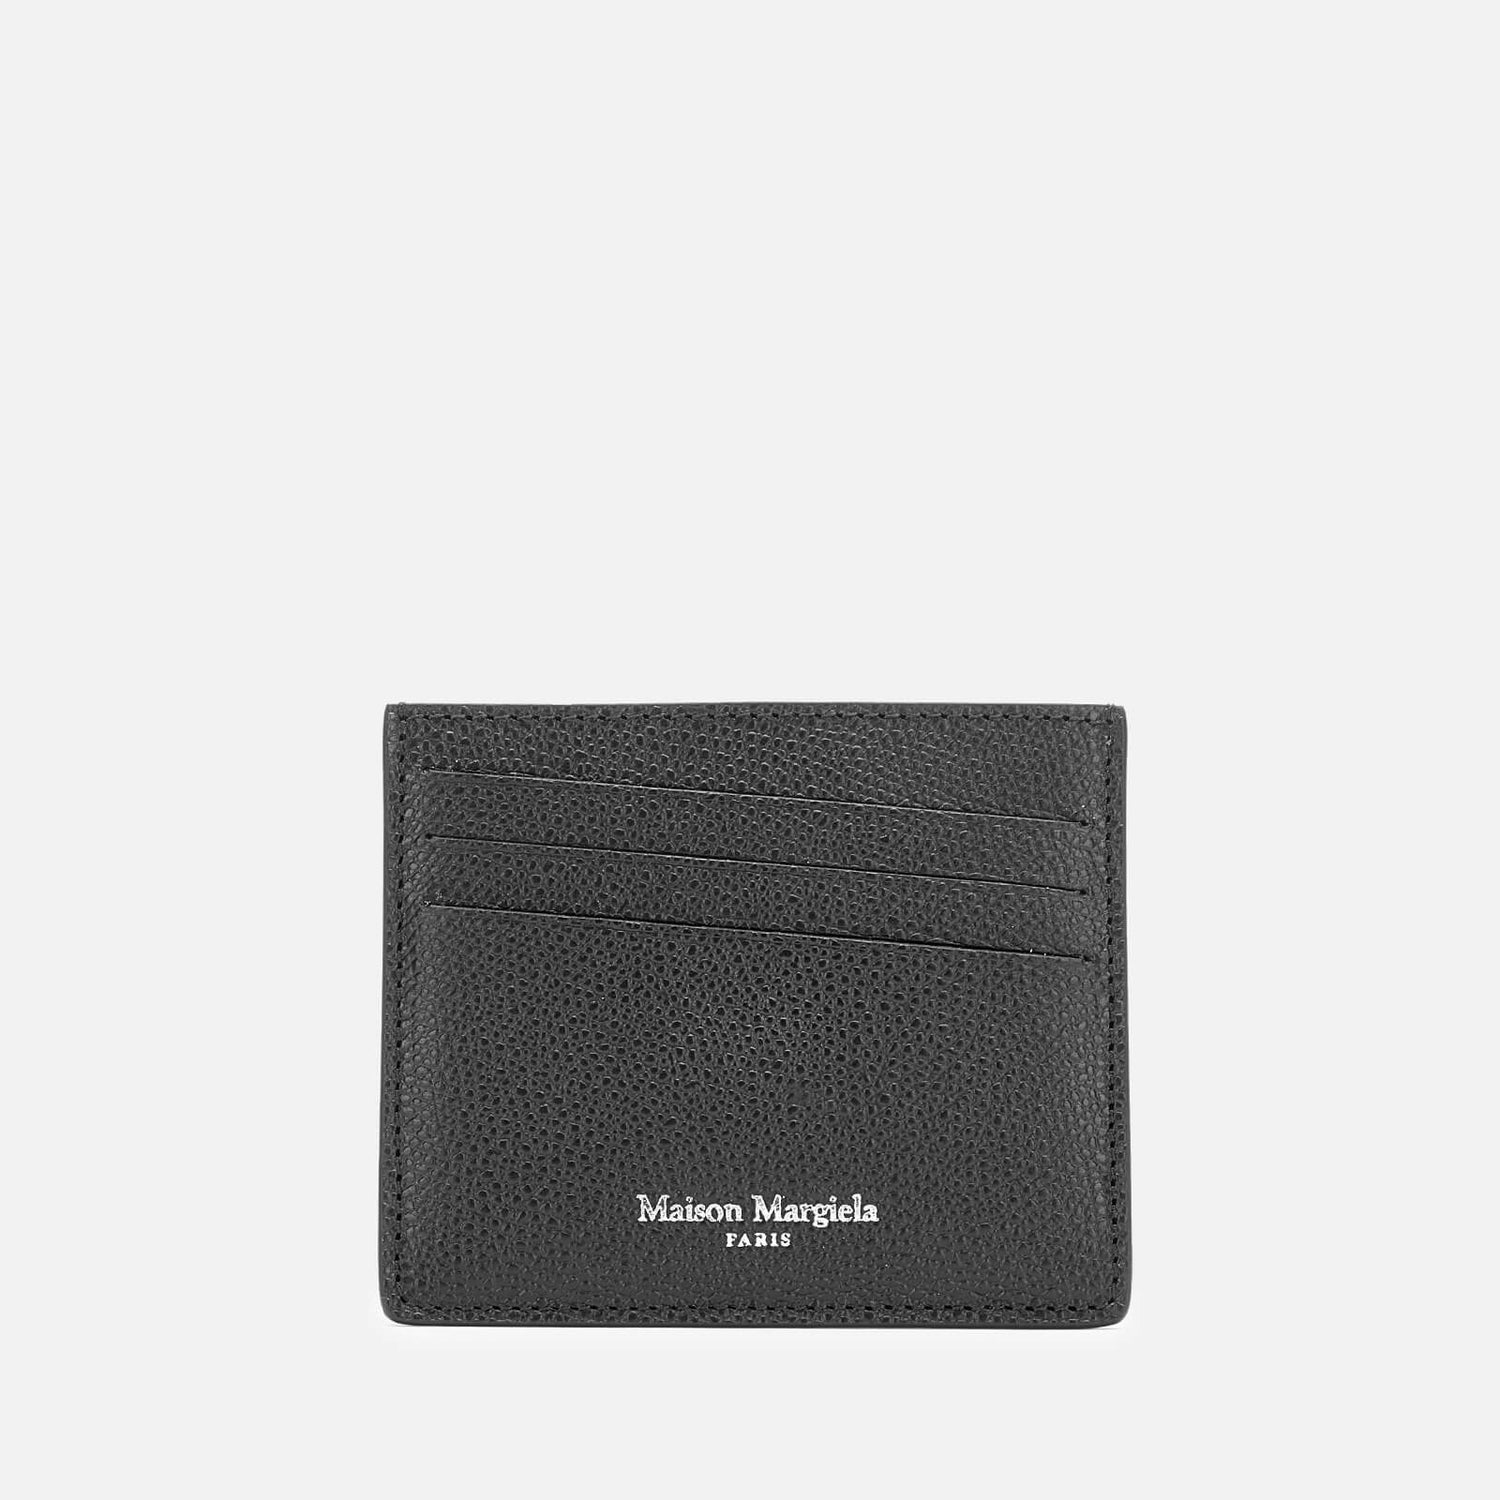 Maison Margiela Men's Leather Cardholder - Black